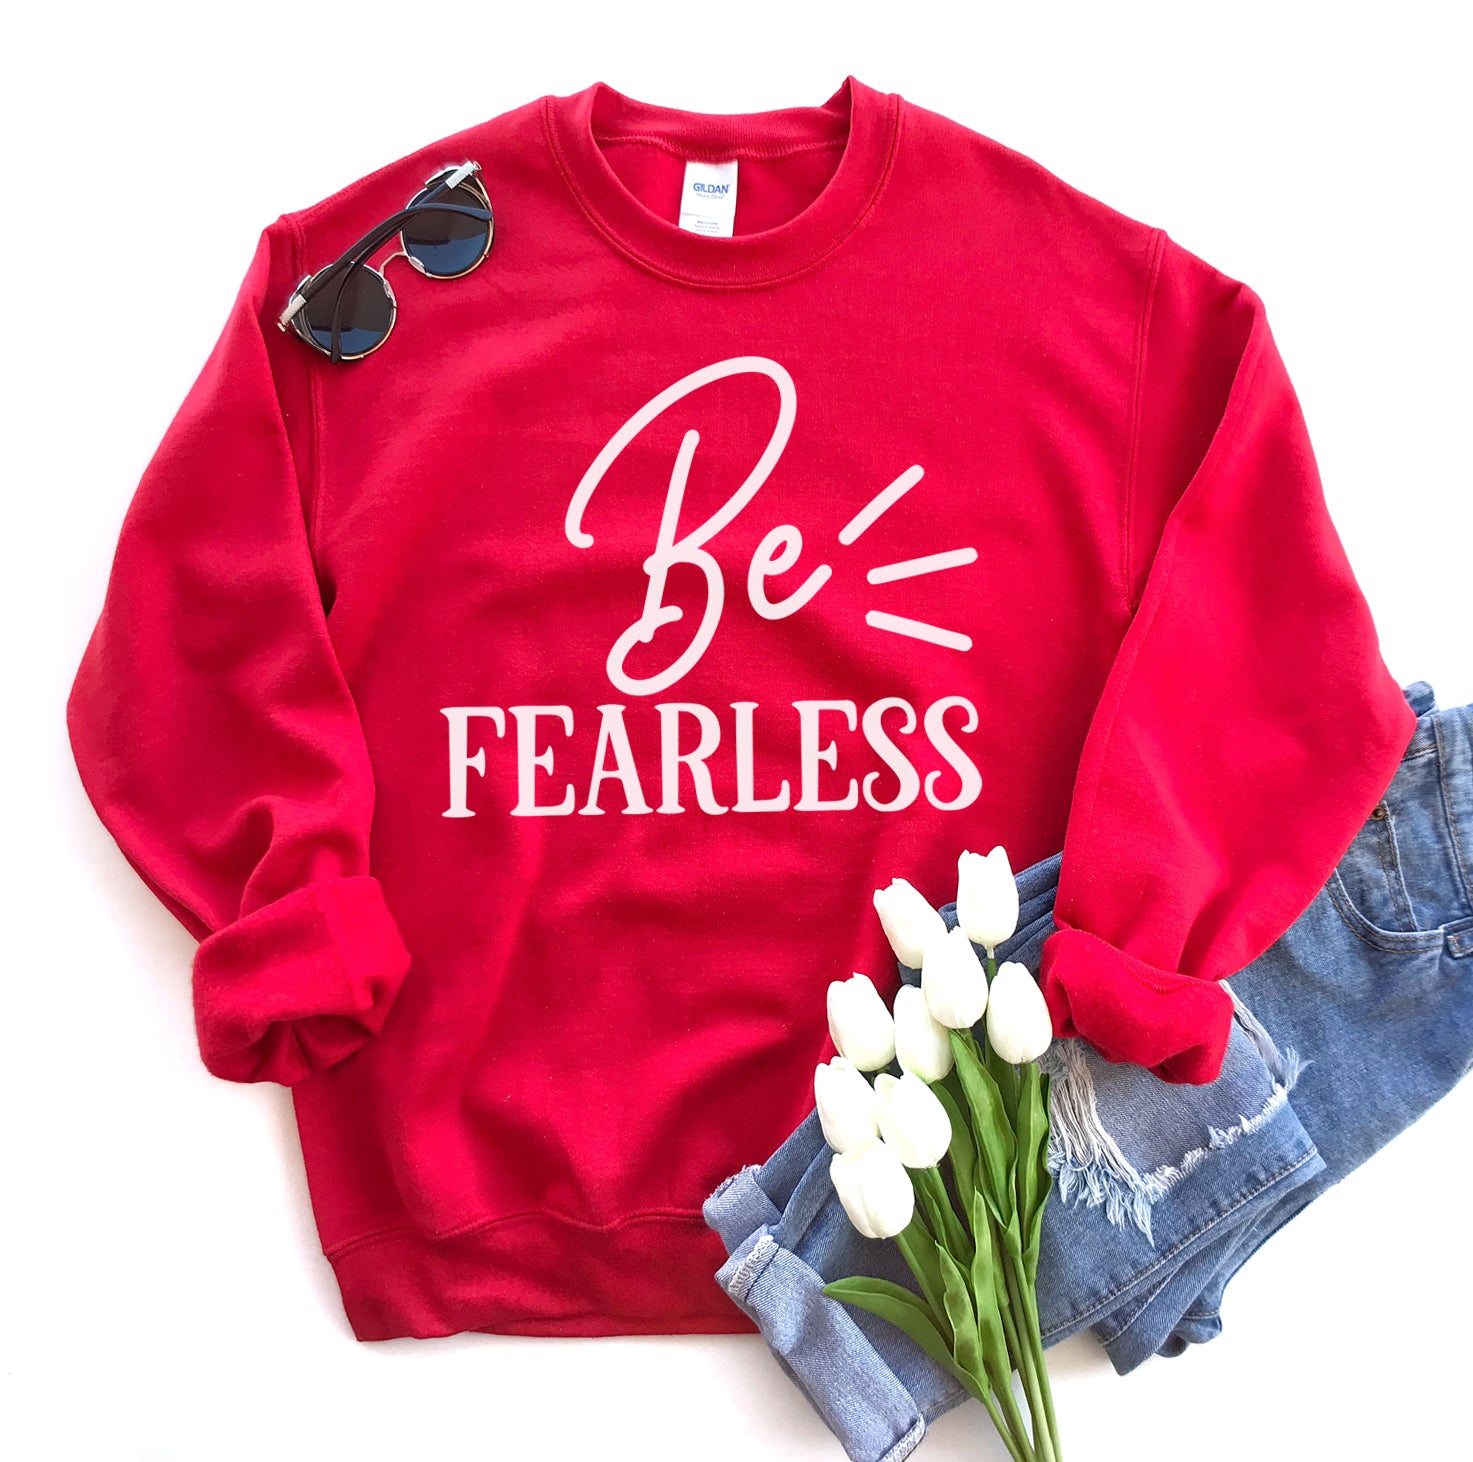 Be Fearless Sweatshirt